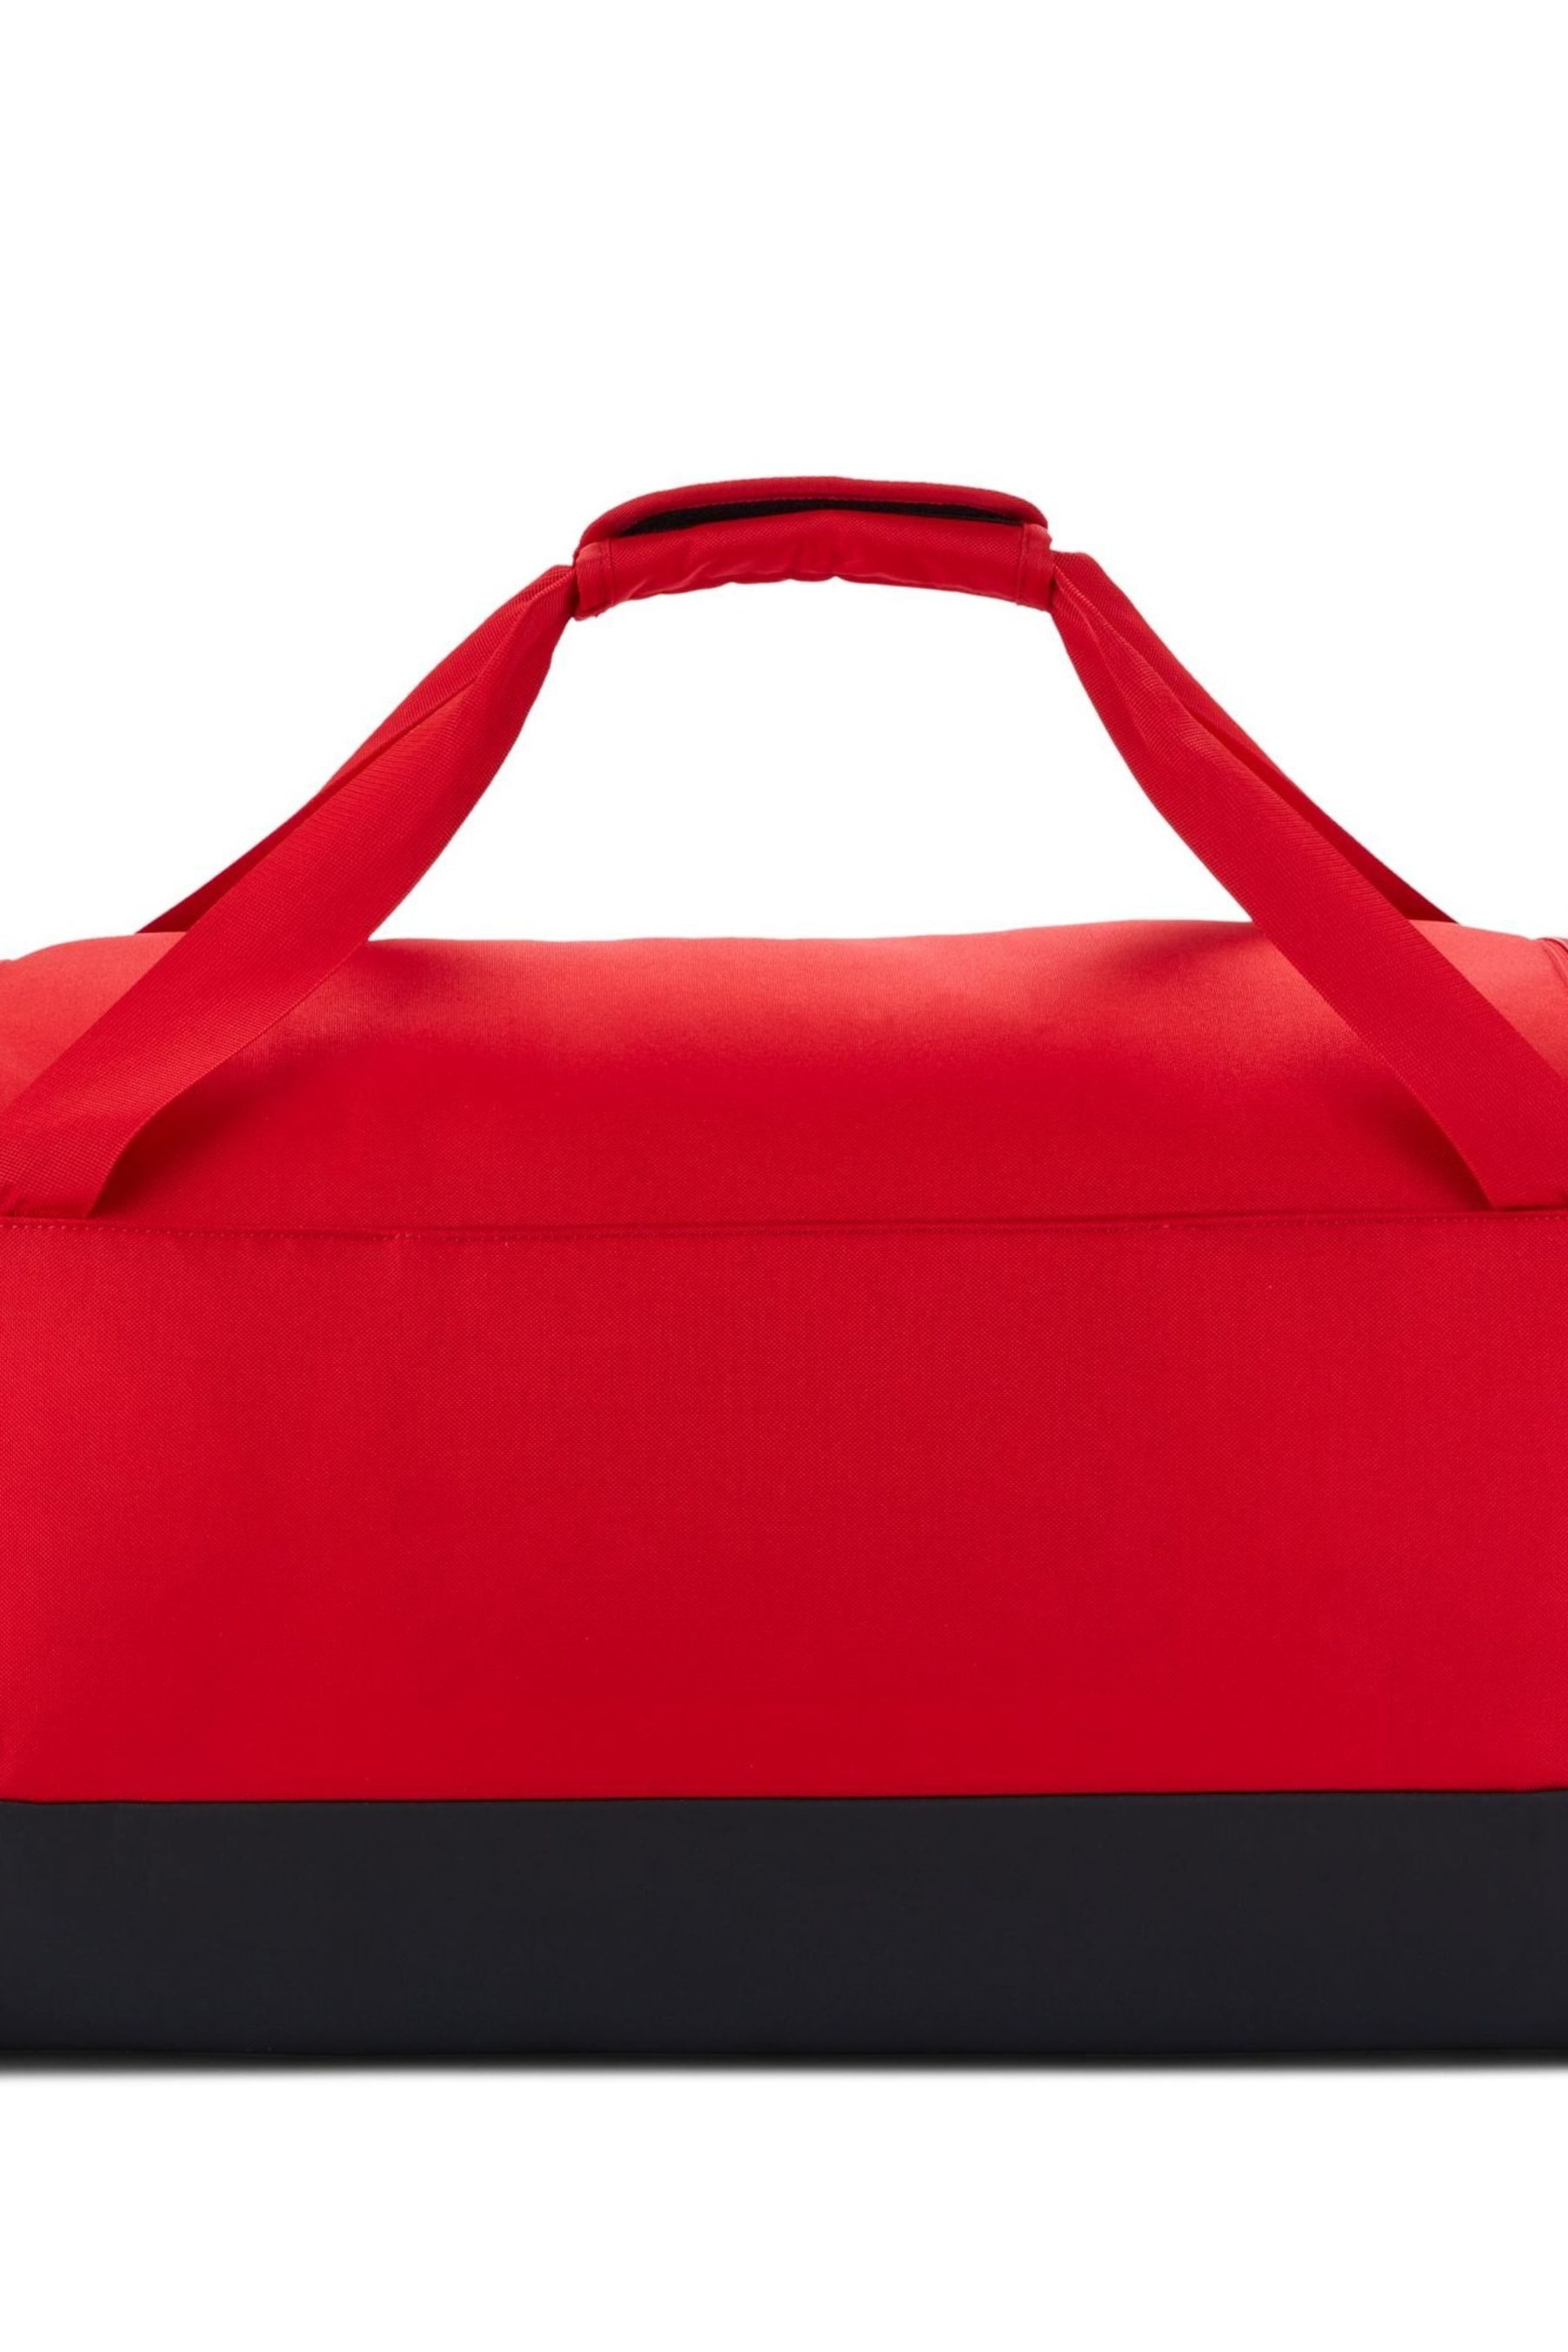 Nike Red Medium Academy Team Football Duffel Bag 60L - Image 9 of 11